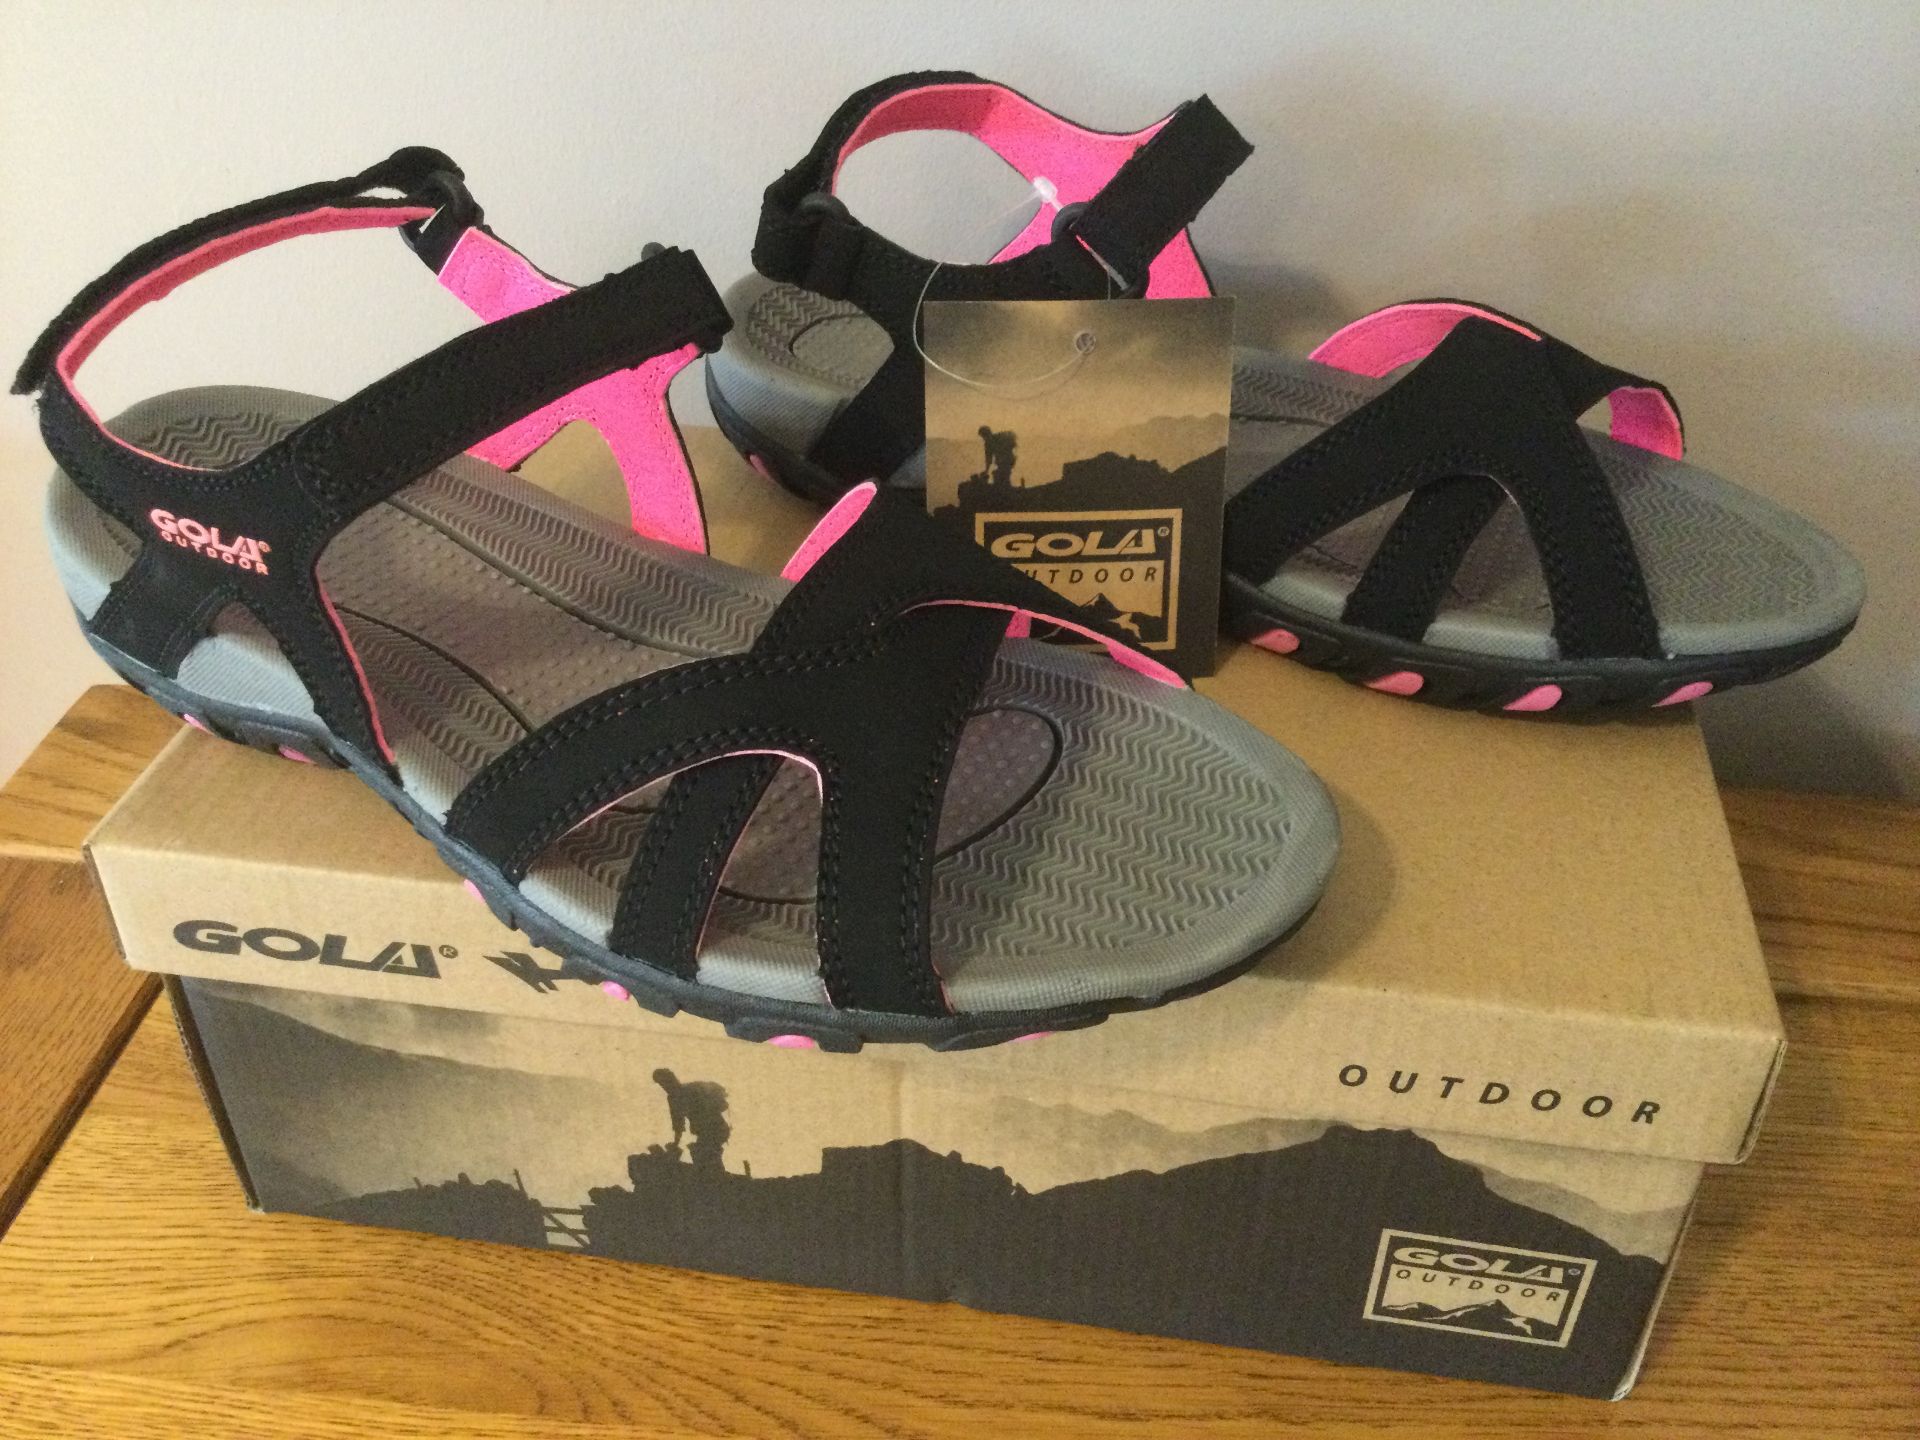 Gola Women's “Cedar” Hiking Sandals, Black/Hot Pink, Size 6 - Brand New